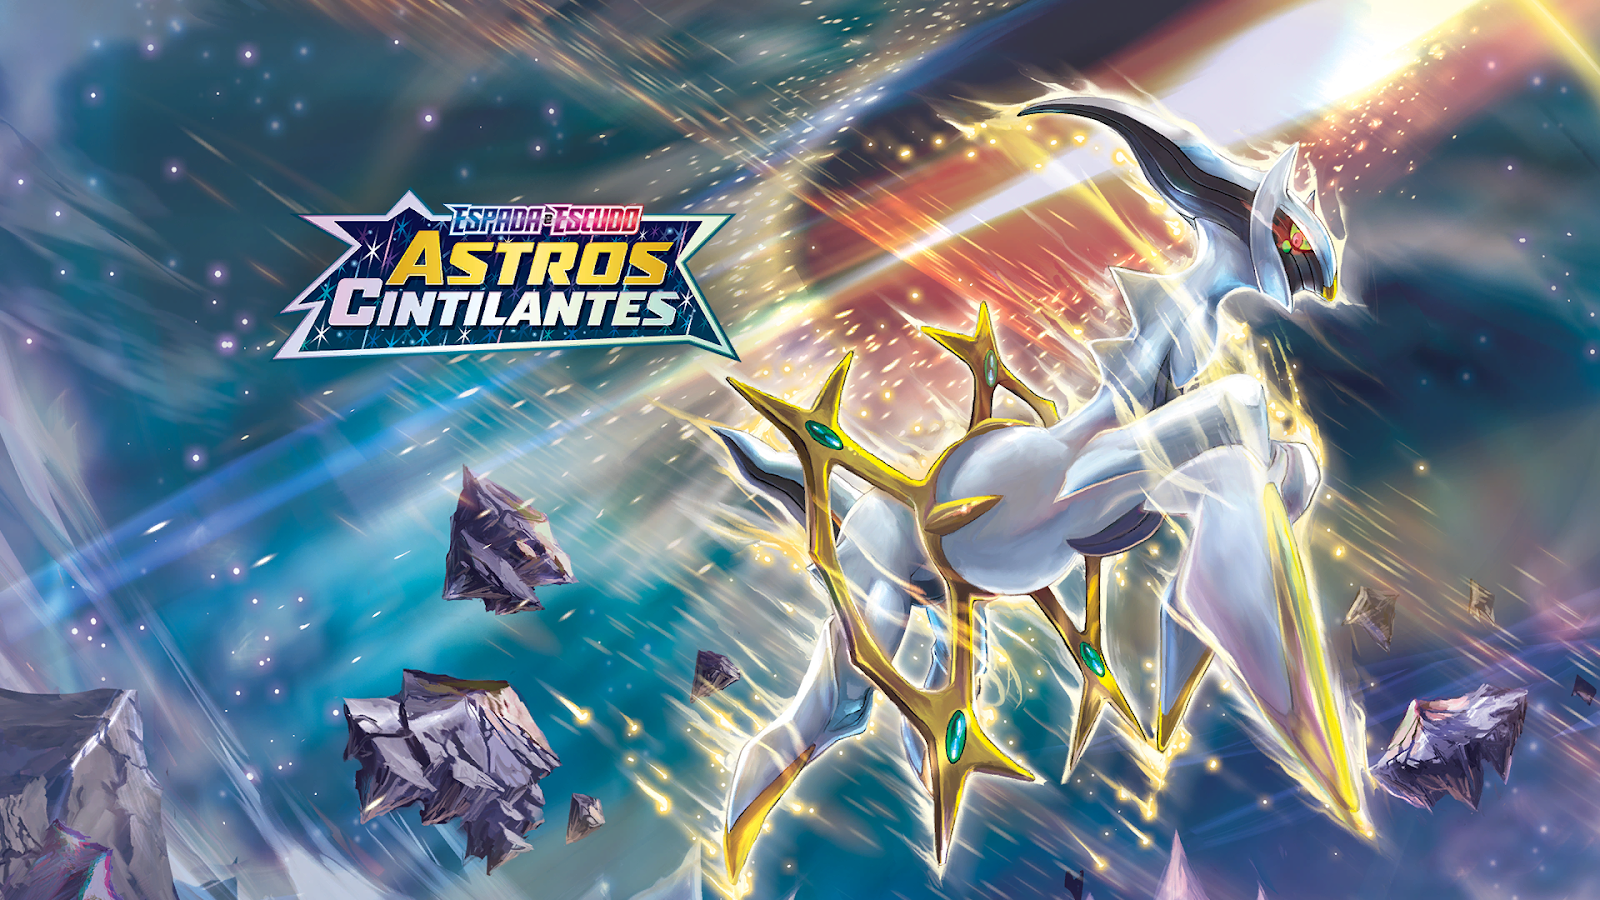 Astros Cintilantes - Pokemon - Epic Game